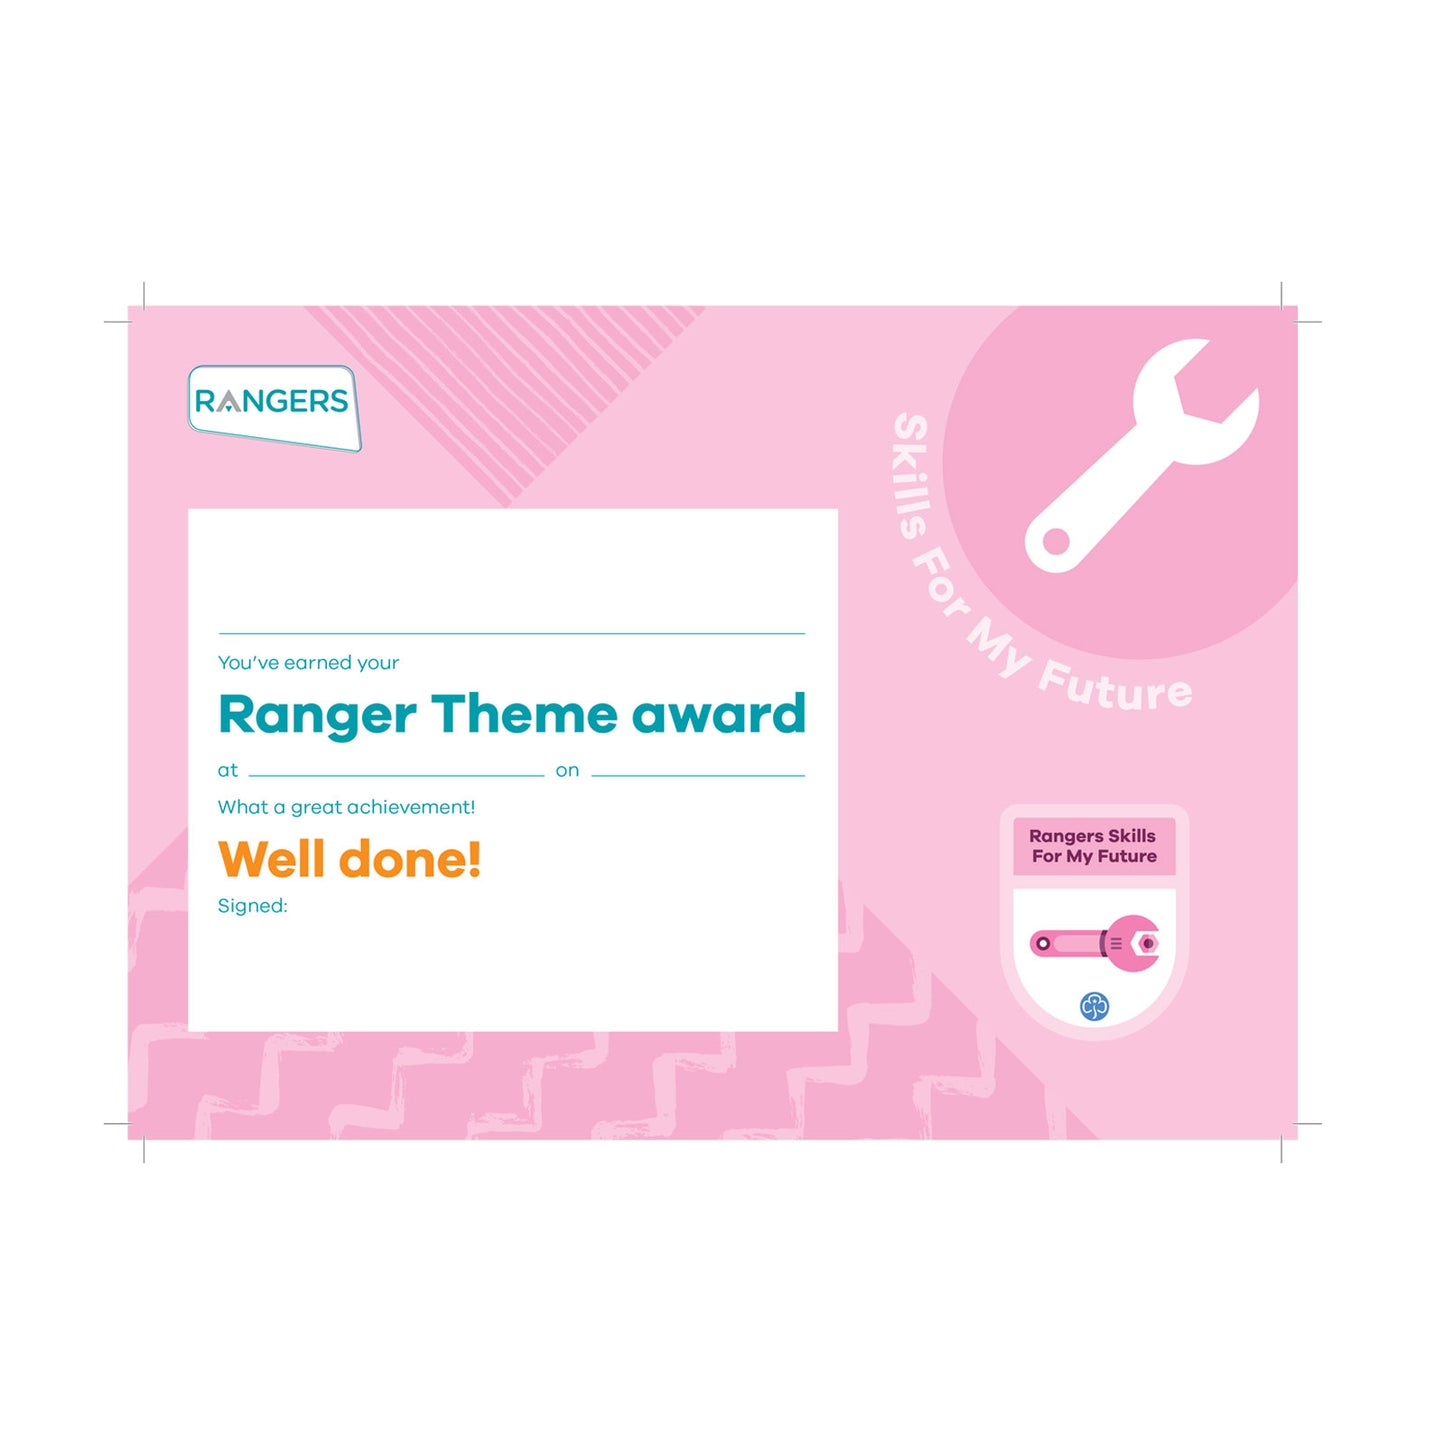 Theme Award - Rangers Skills For My Future Certificate